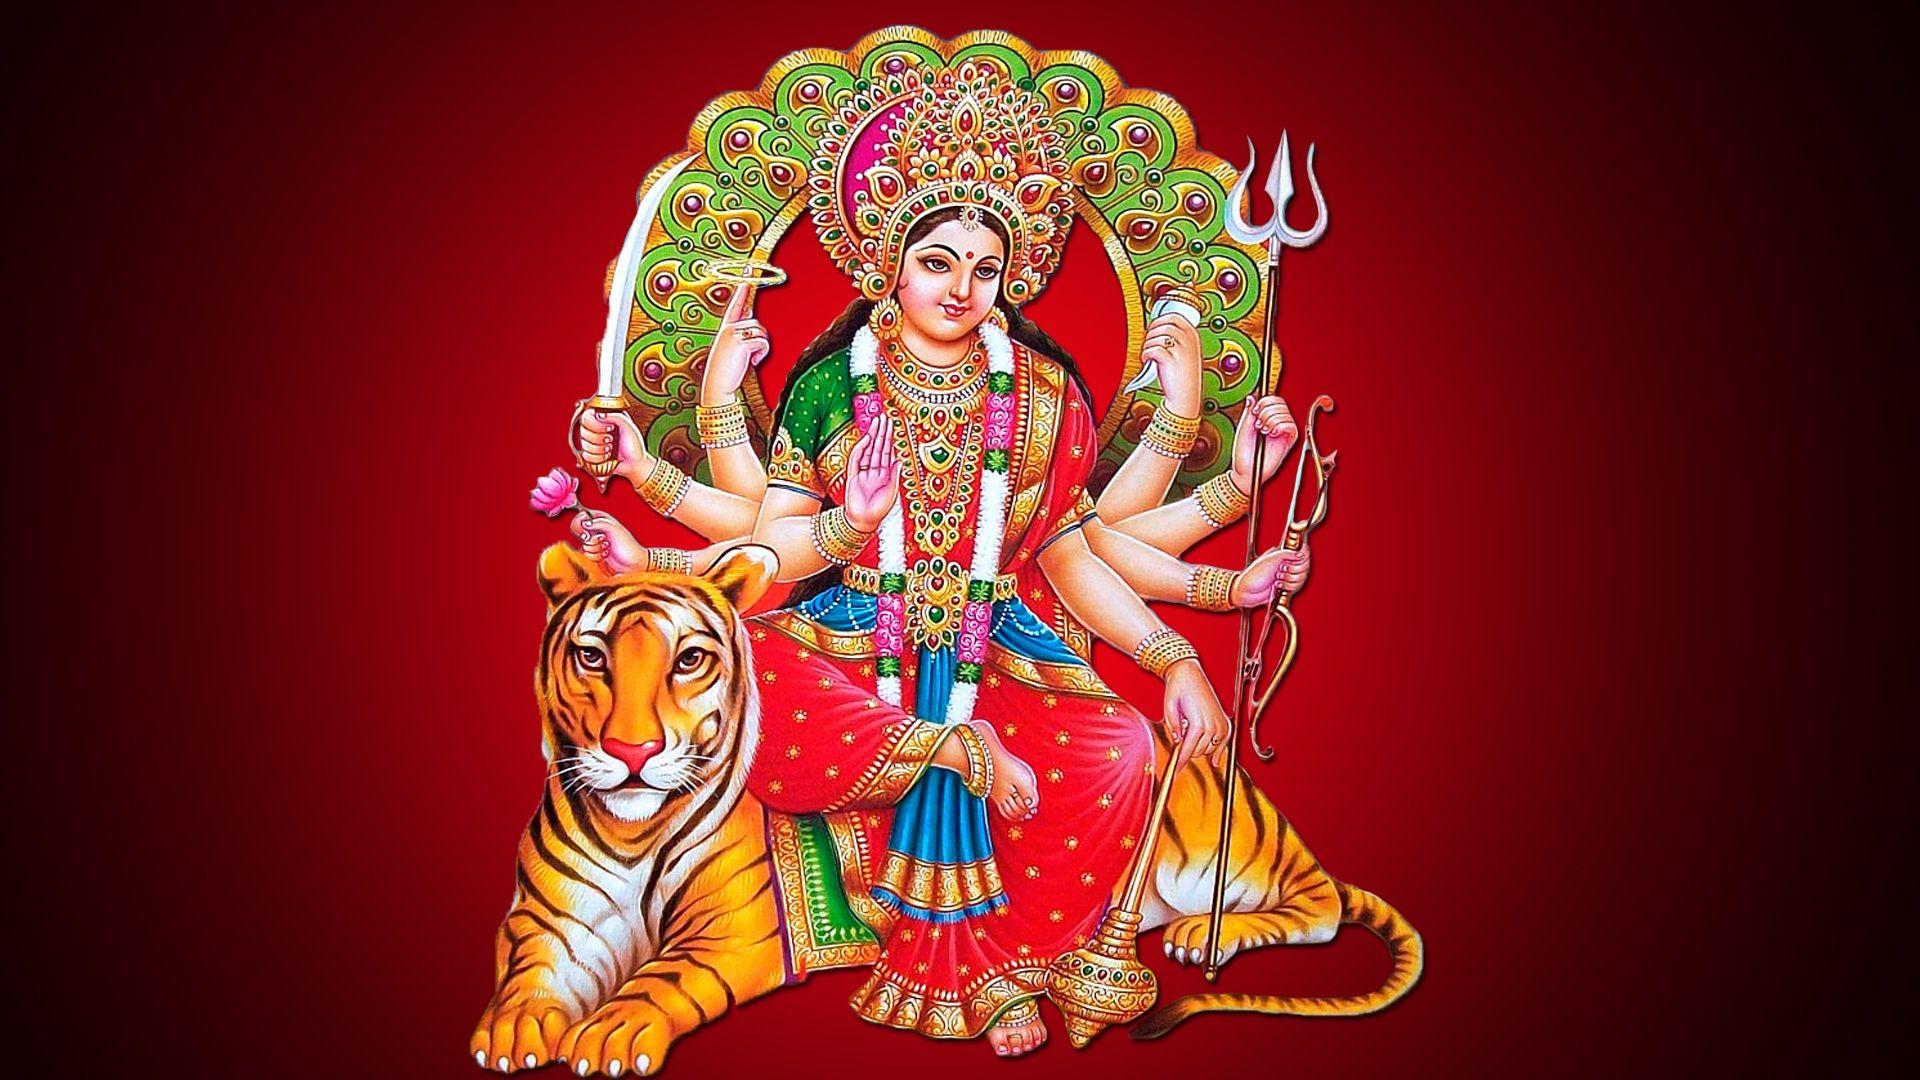 Maa Durga image, wallpapers, photos & pics, download Maa Durga hd.